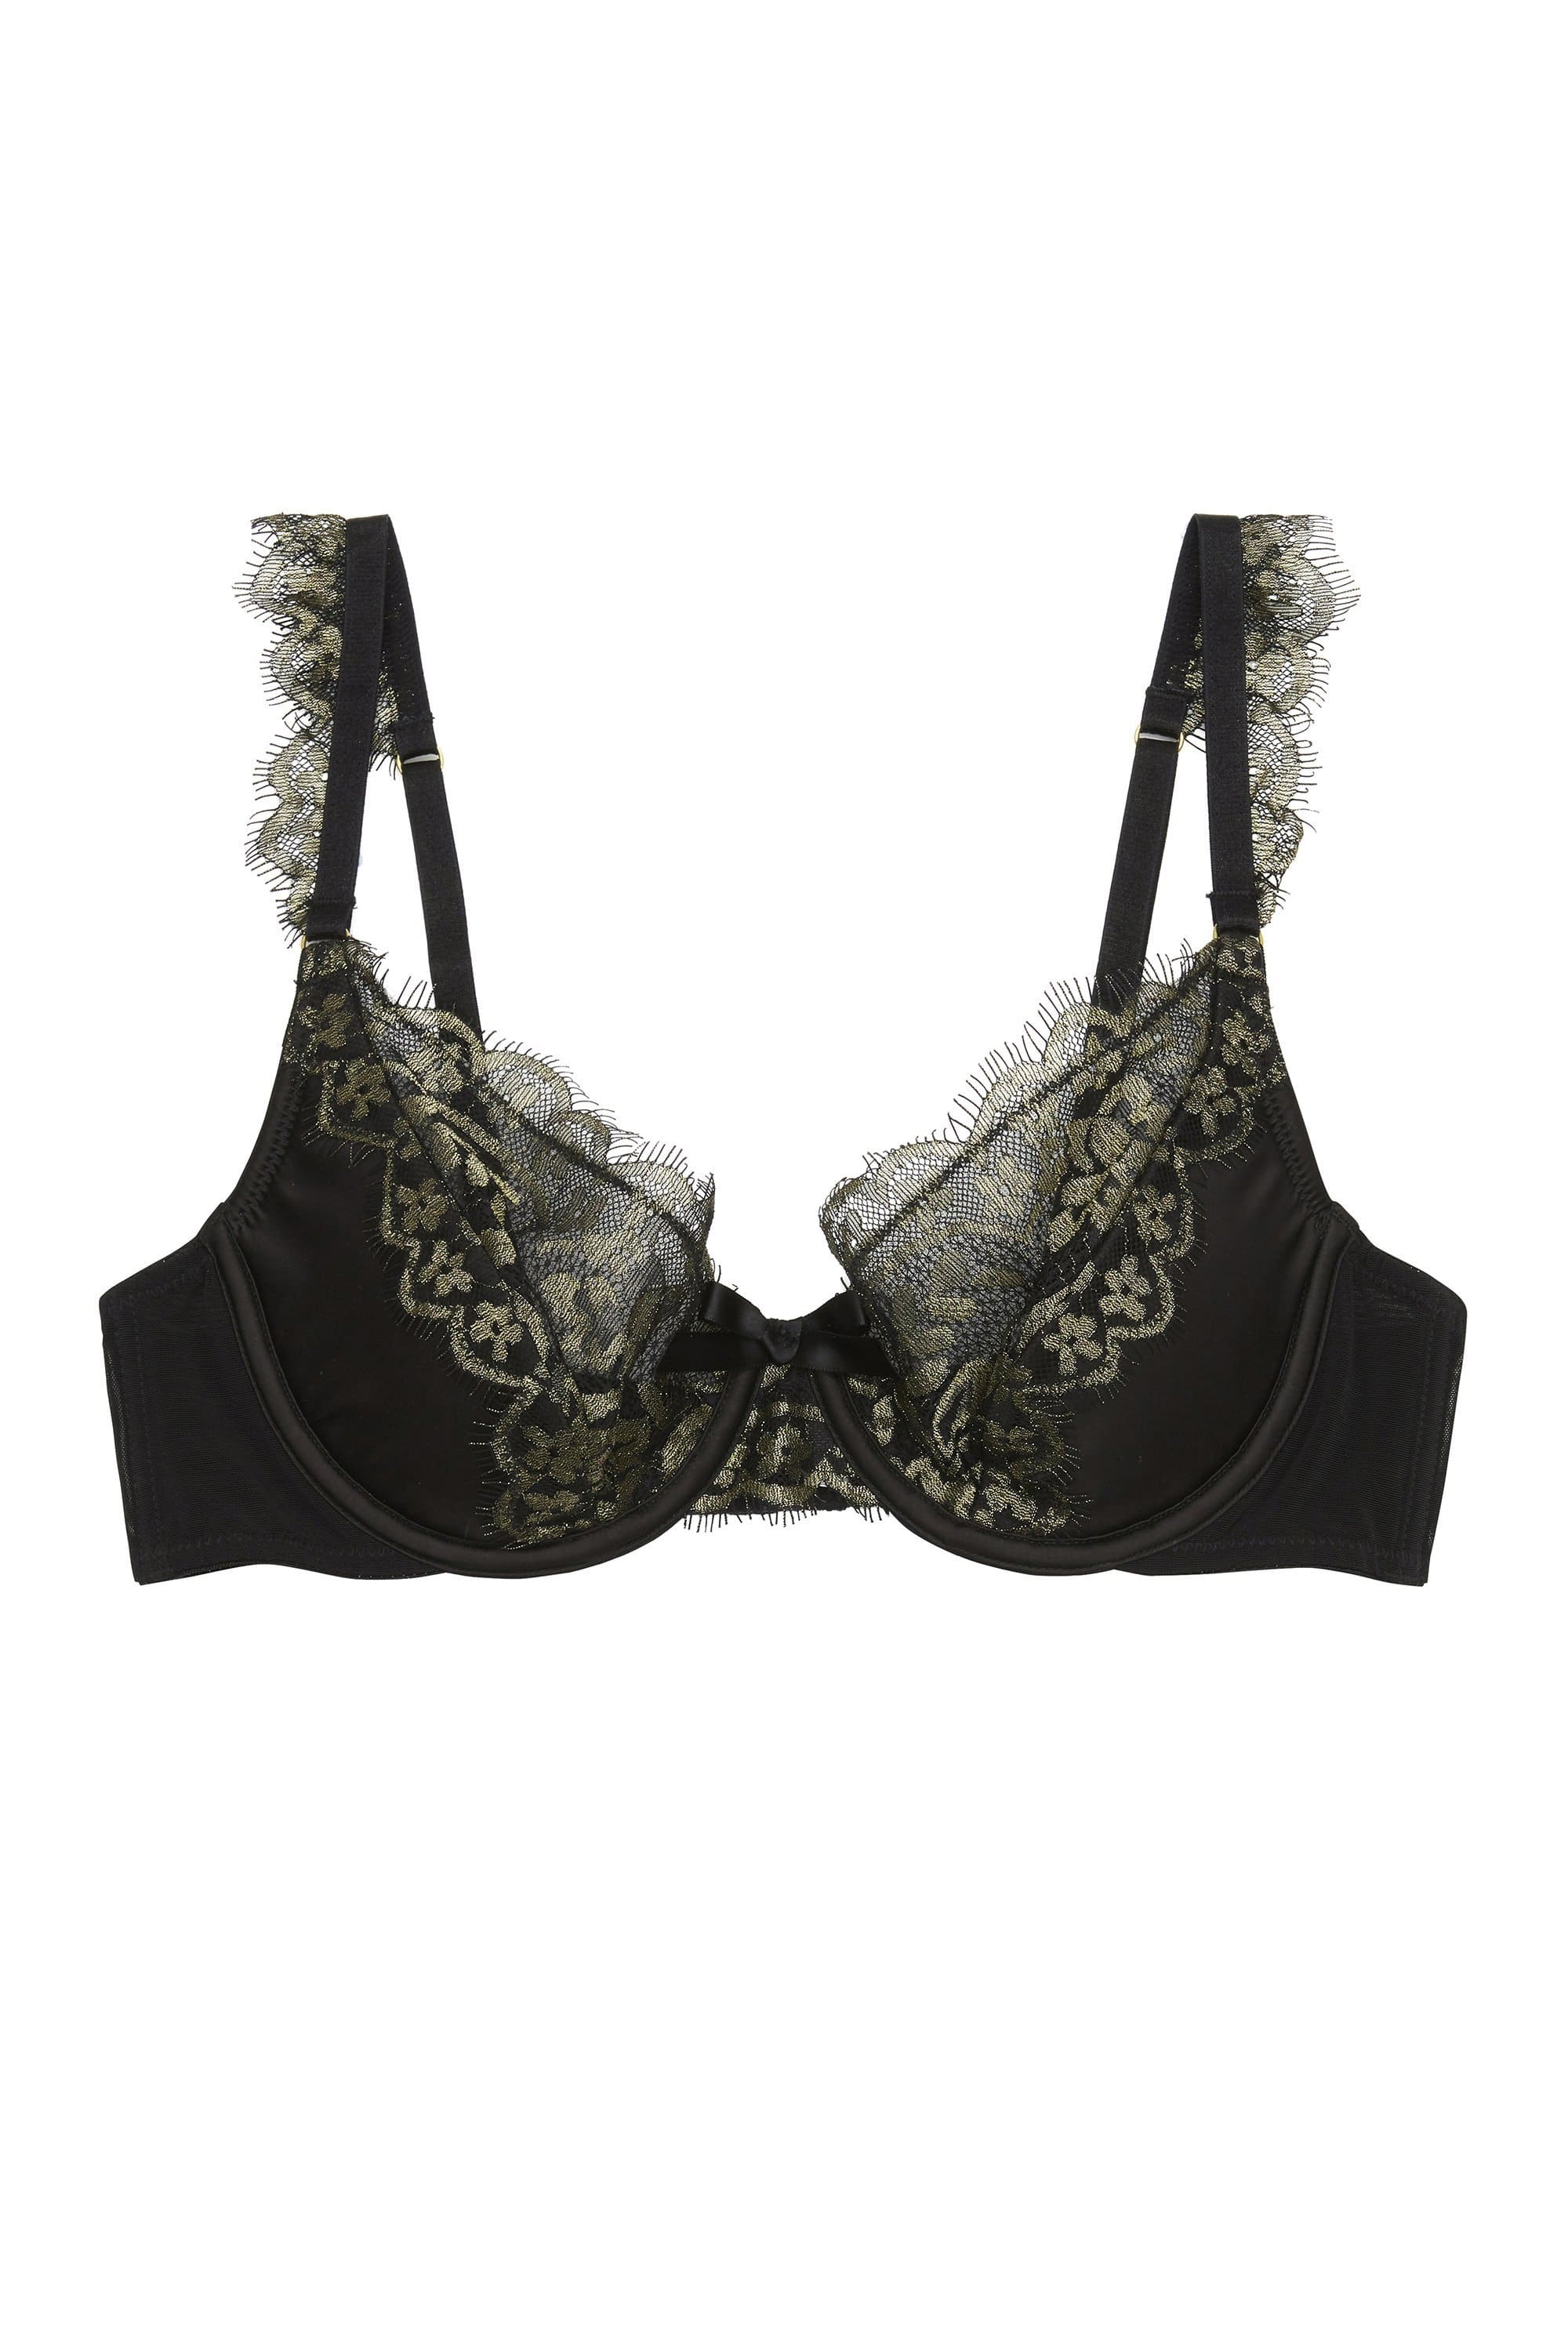 Boux Avenue Freja plunge bra - Black - 36DD, £12.00